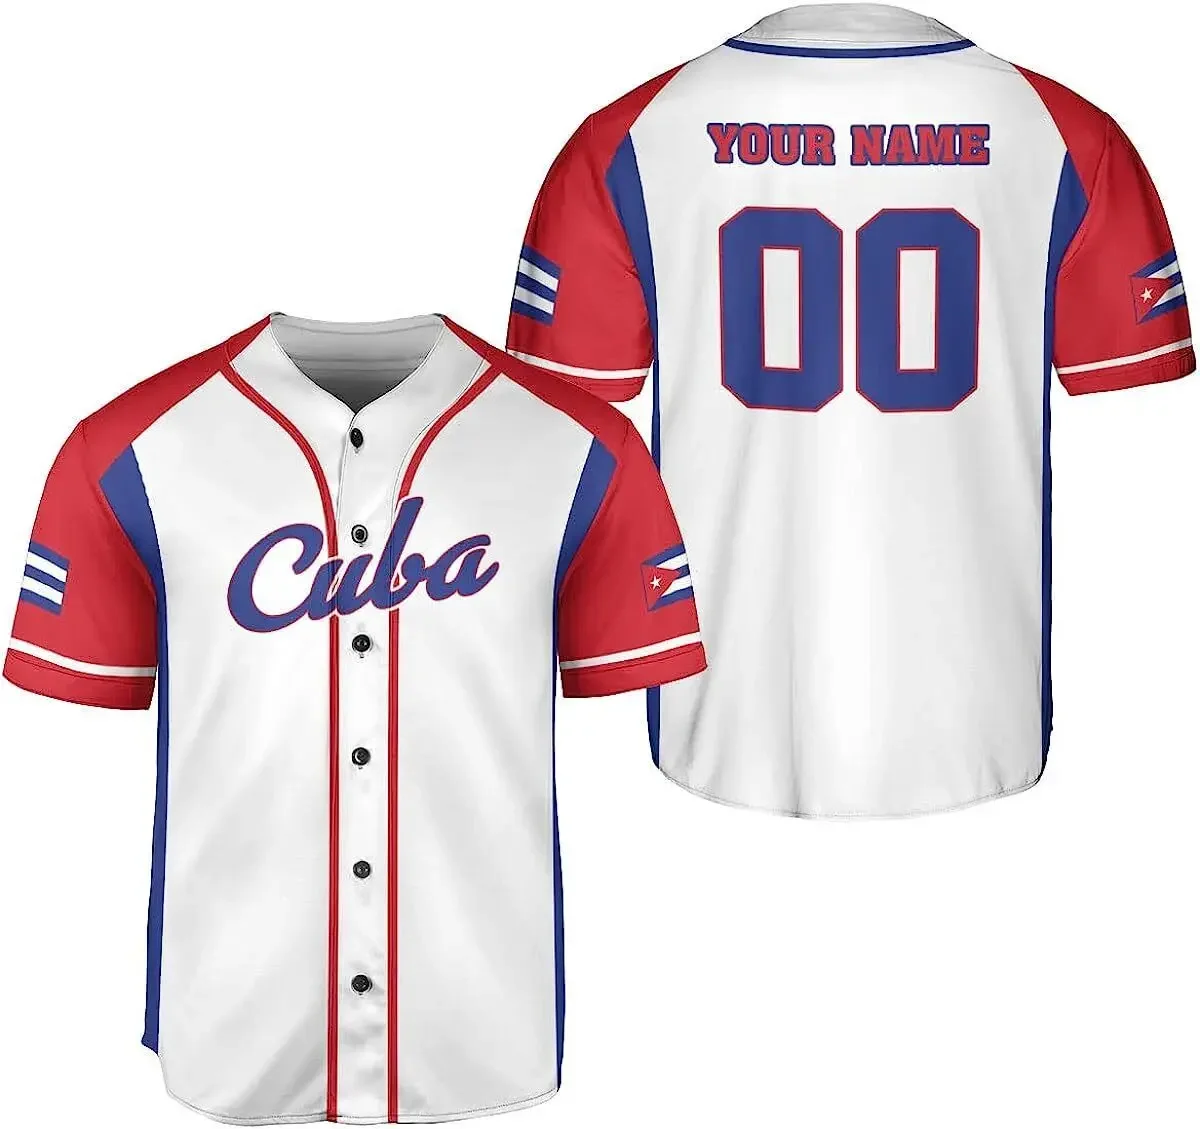 

Custom Cuba Olive Army FLAG 3D Print Mesh Fiber Baseball Jersey Shirt Top Tee Men Streetwear Short Sleeve Sport